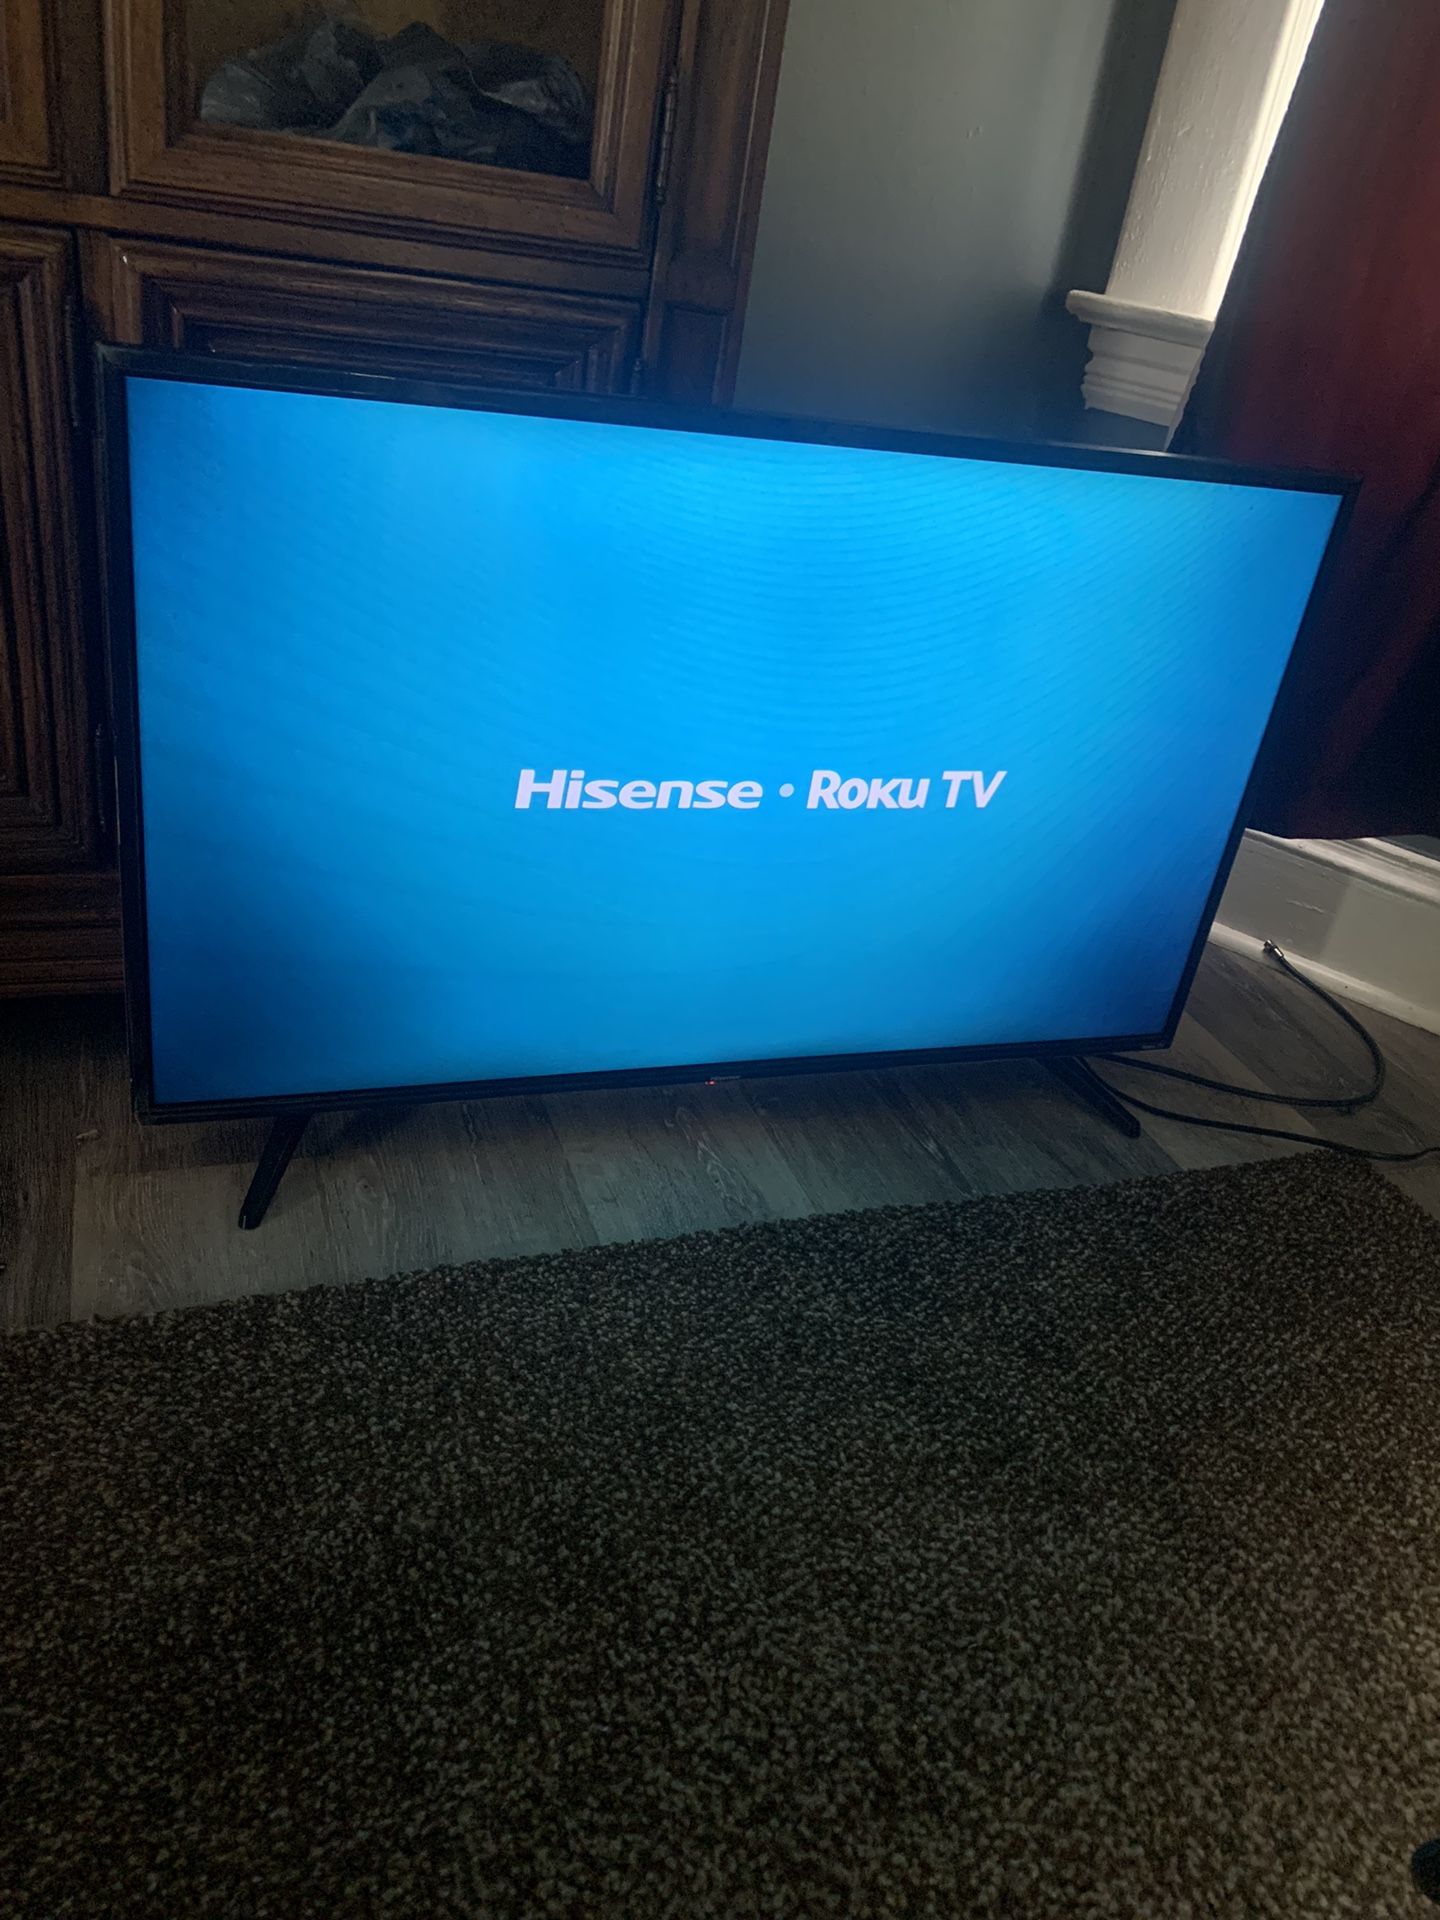 40 Inch TV 